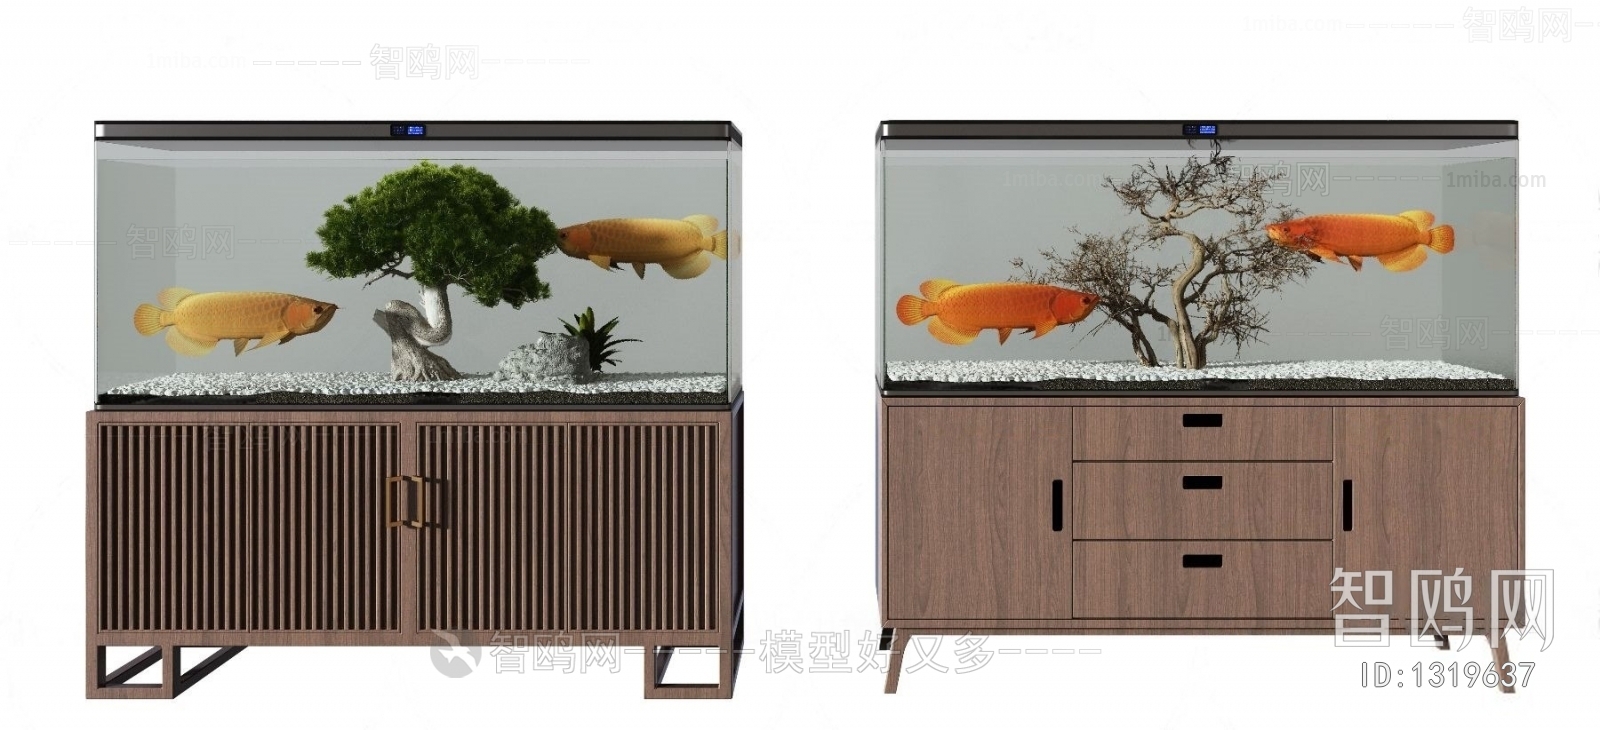 New Chinese Style Fish Tank